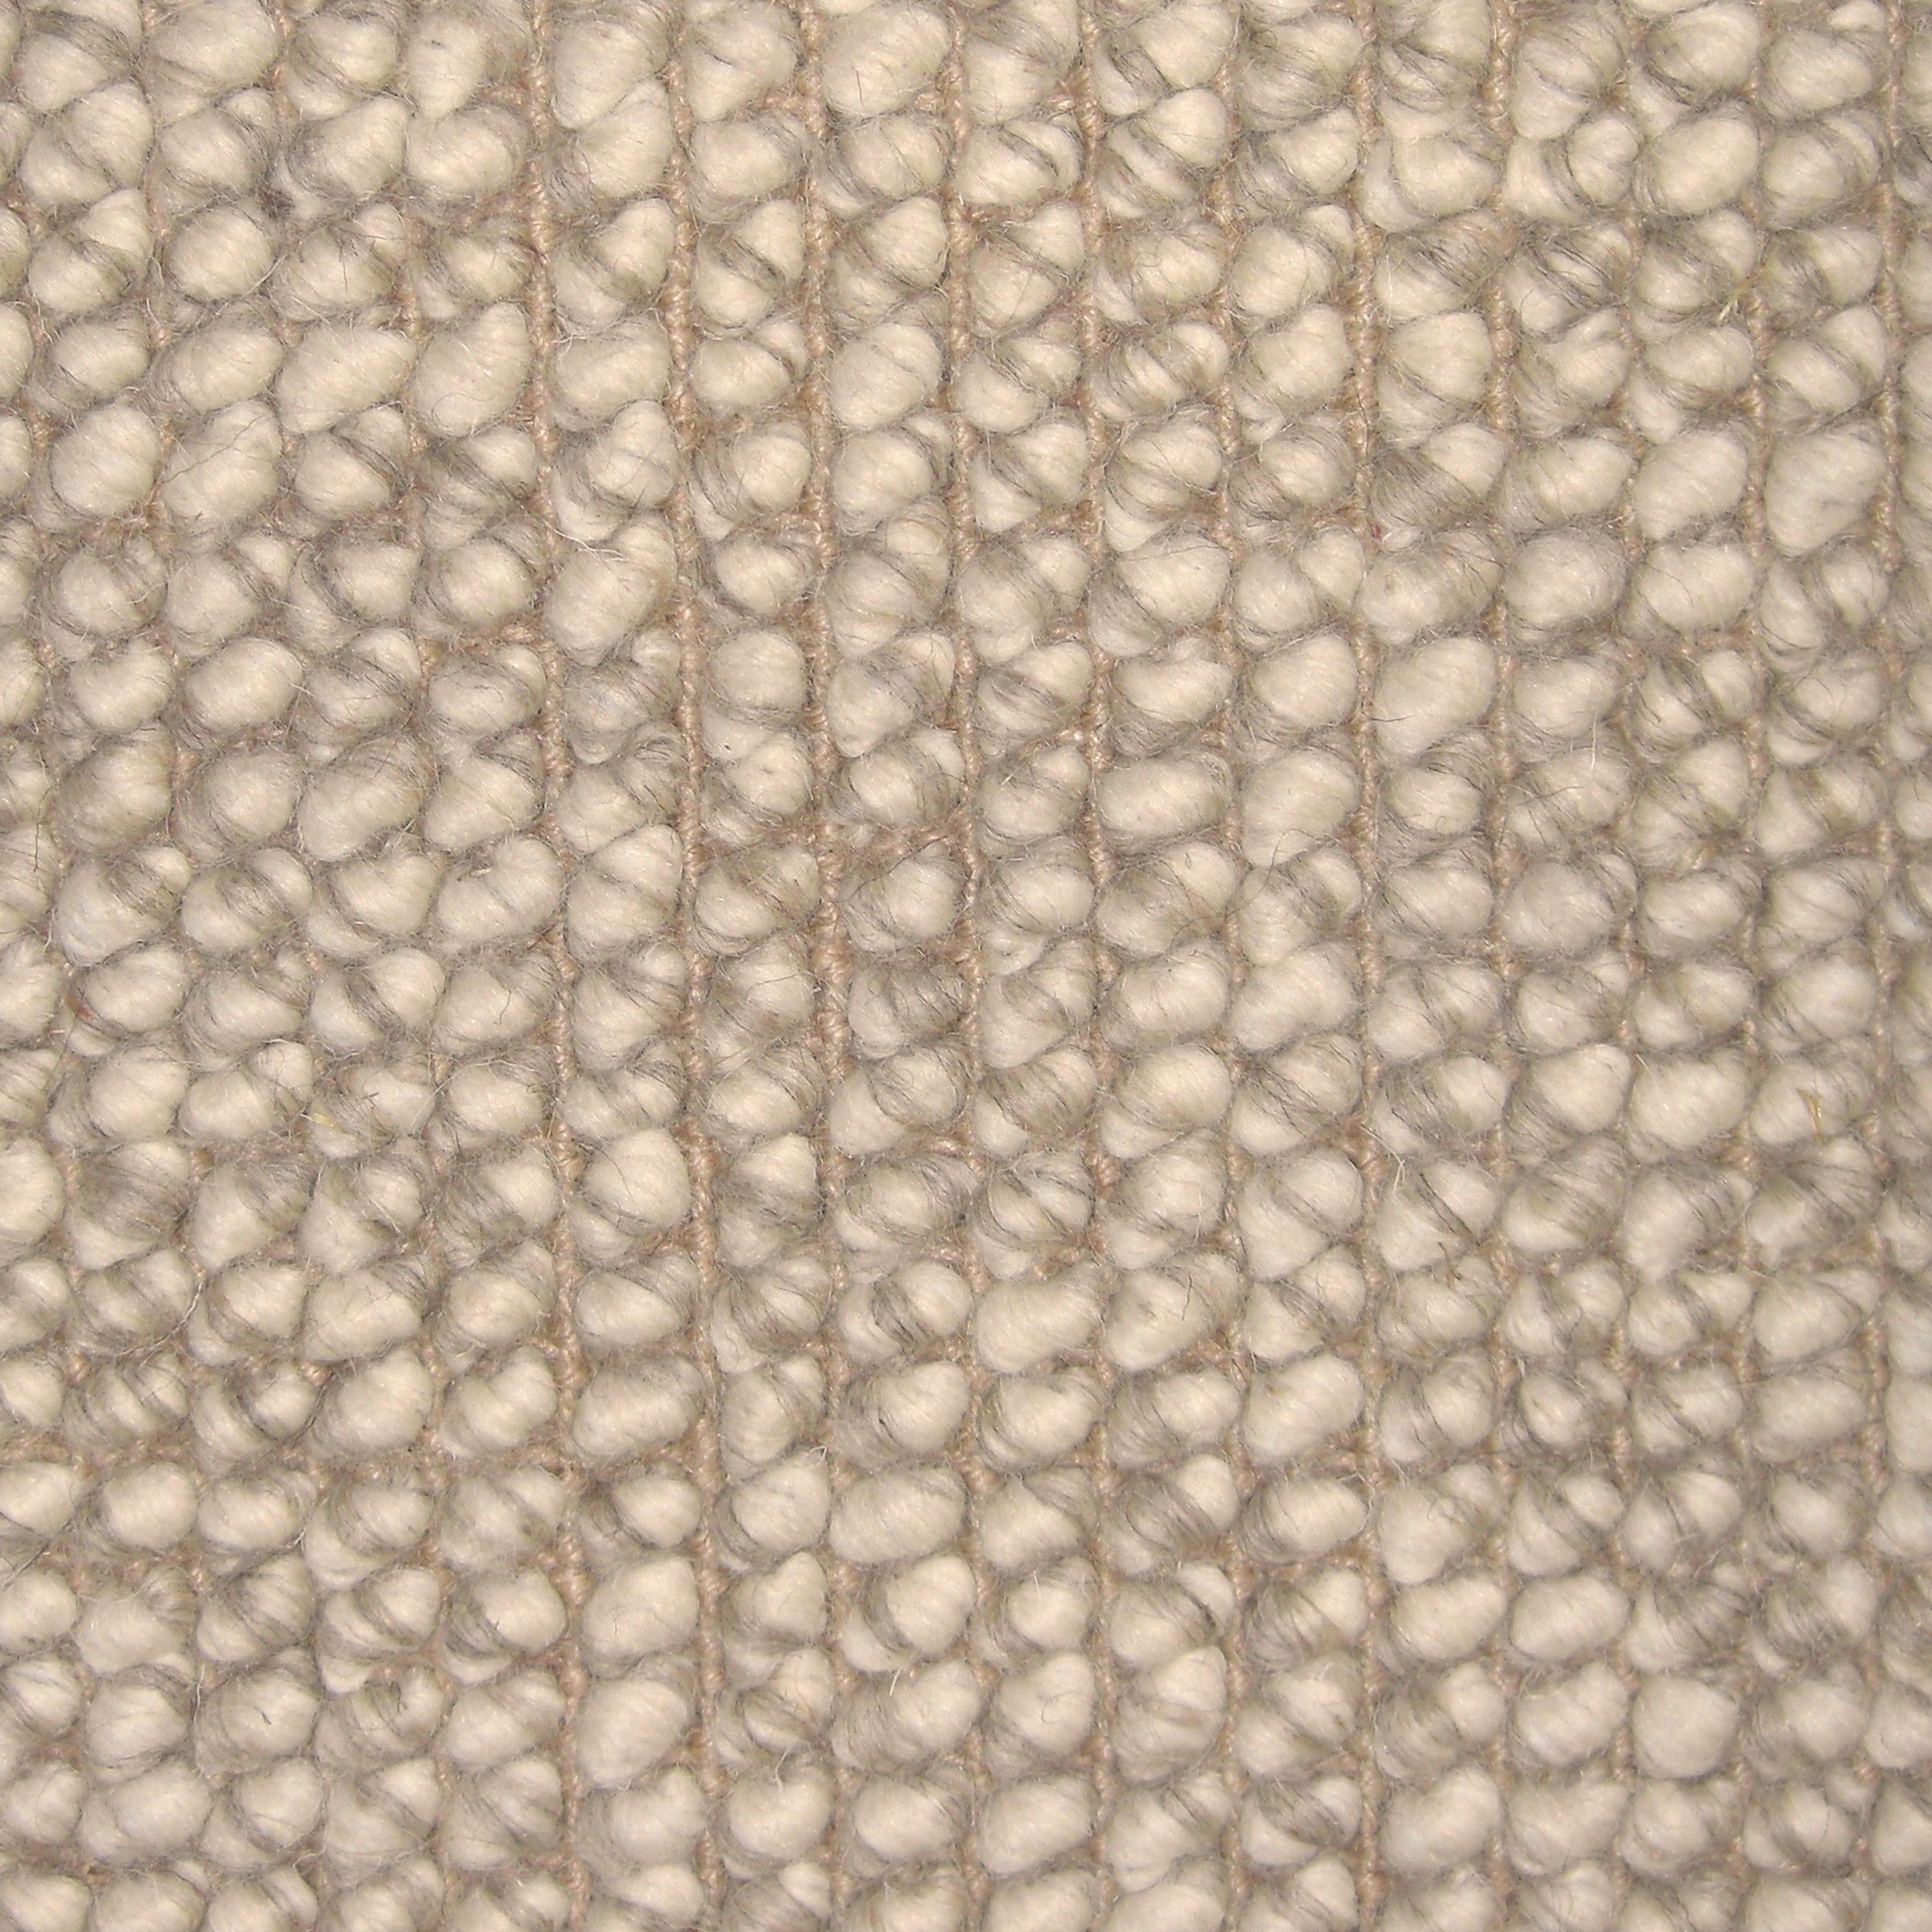 Wool Jute Area Rugs Roselawnlutheran Throughout Jute And Wool Area Rugs (Photo 239 of 264)